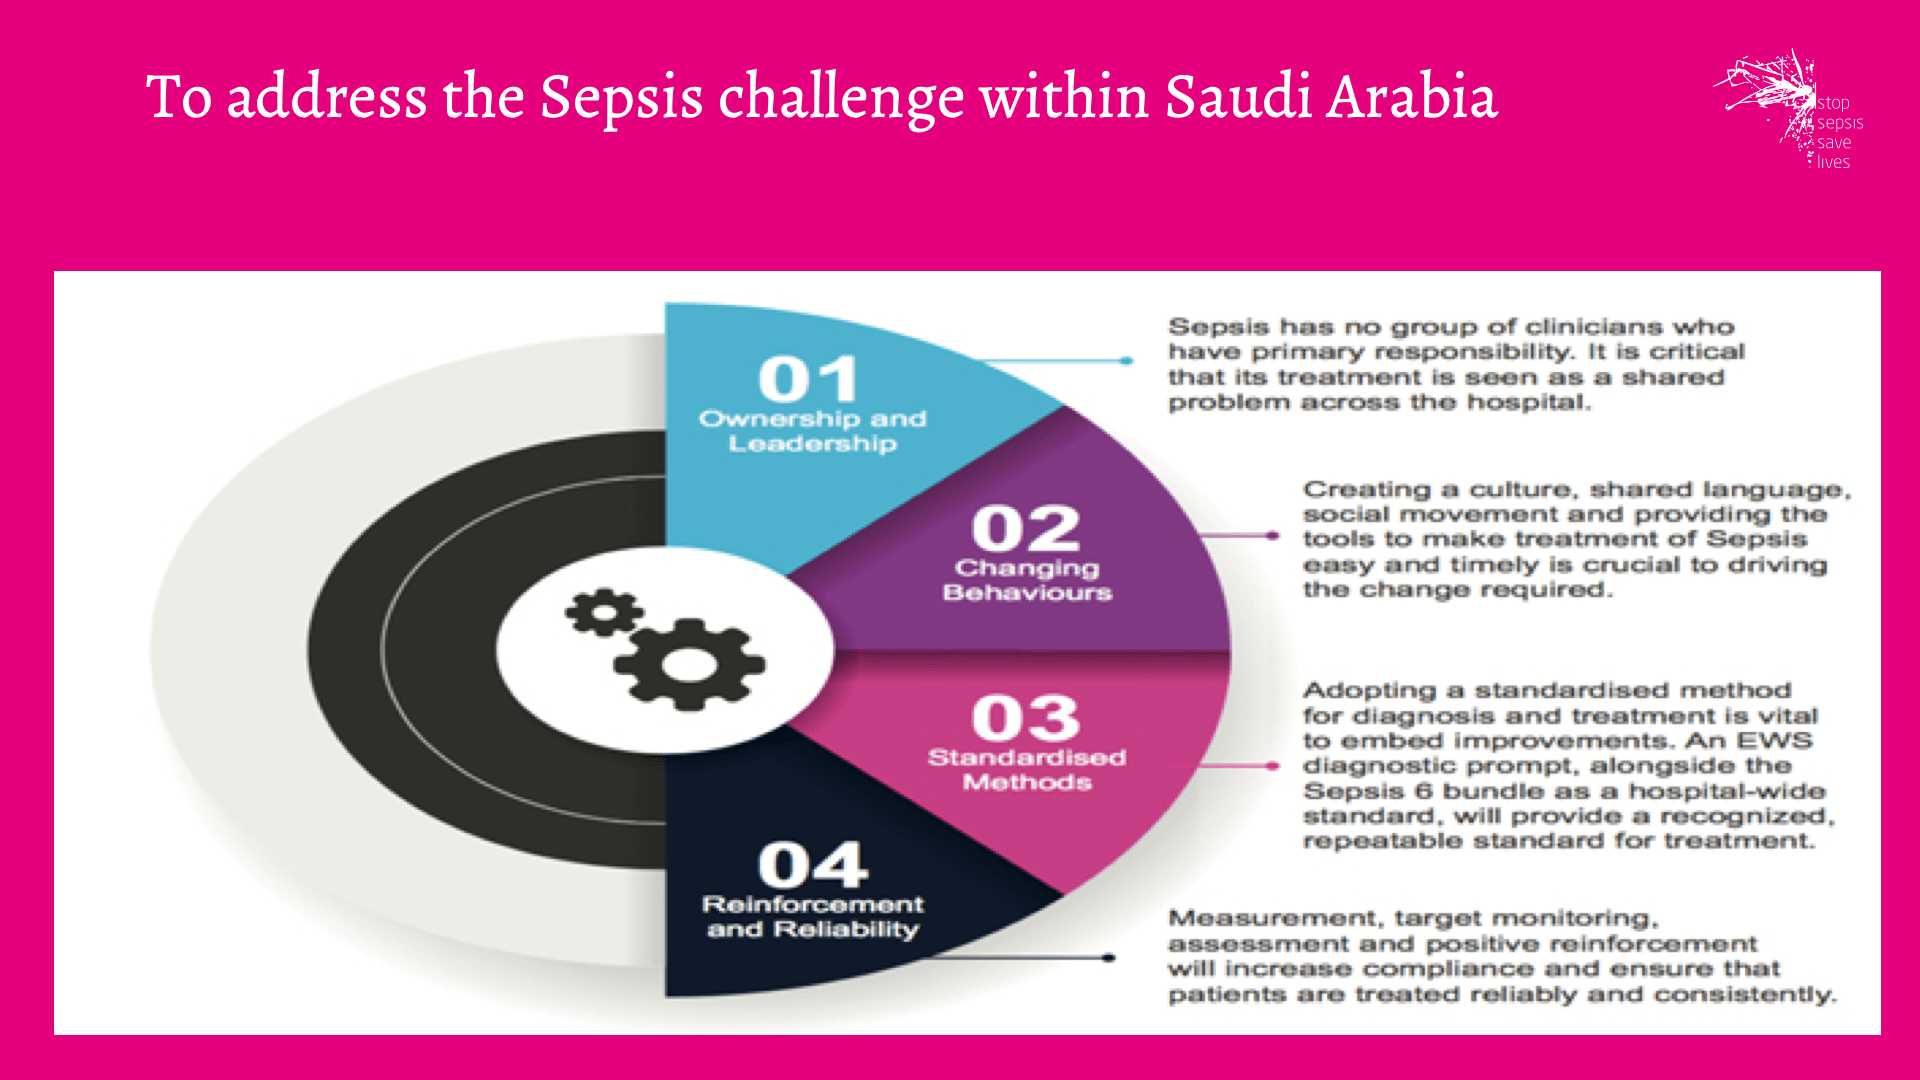 Progress of the National Sepsis Plan in Saudi Arabia5.png